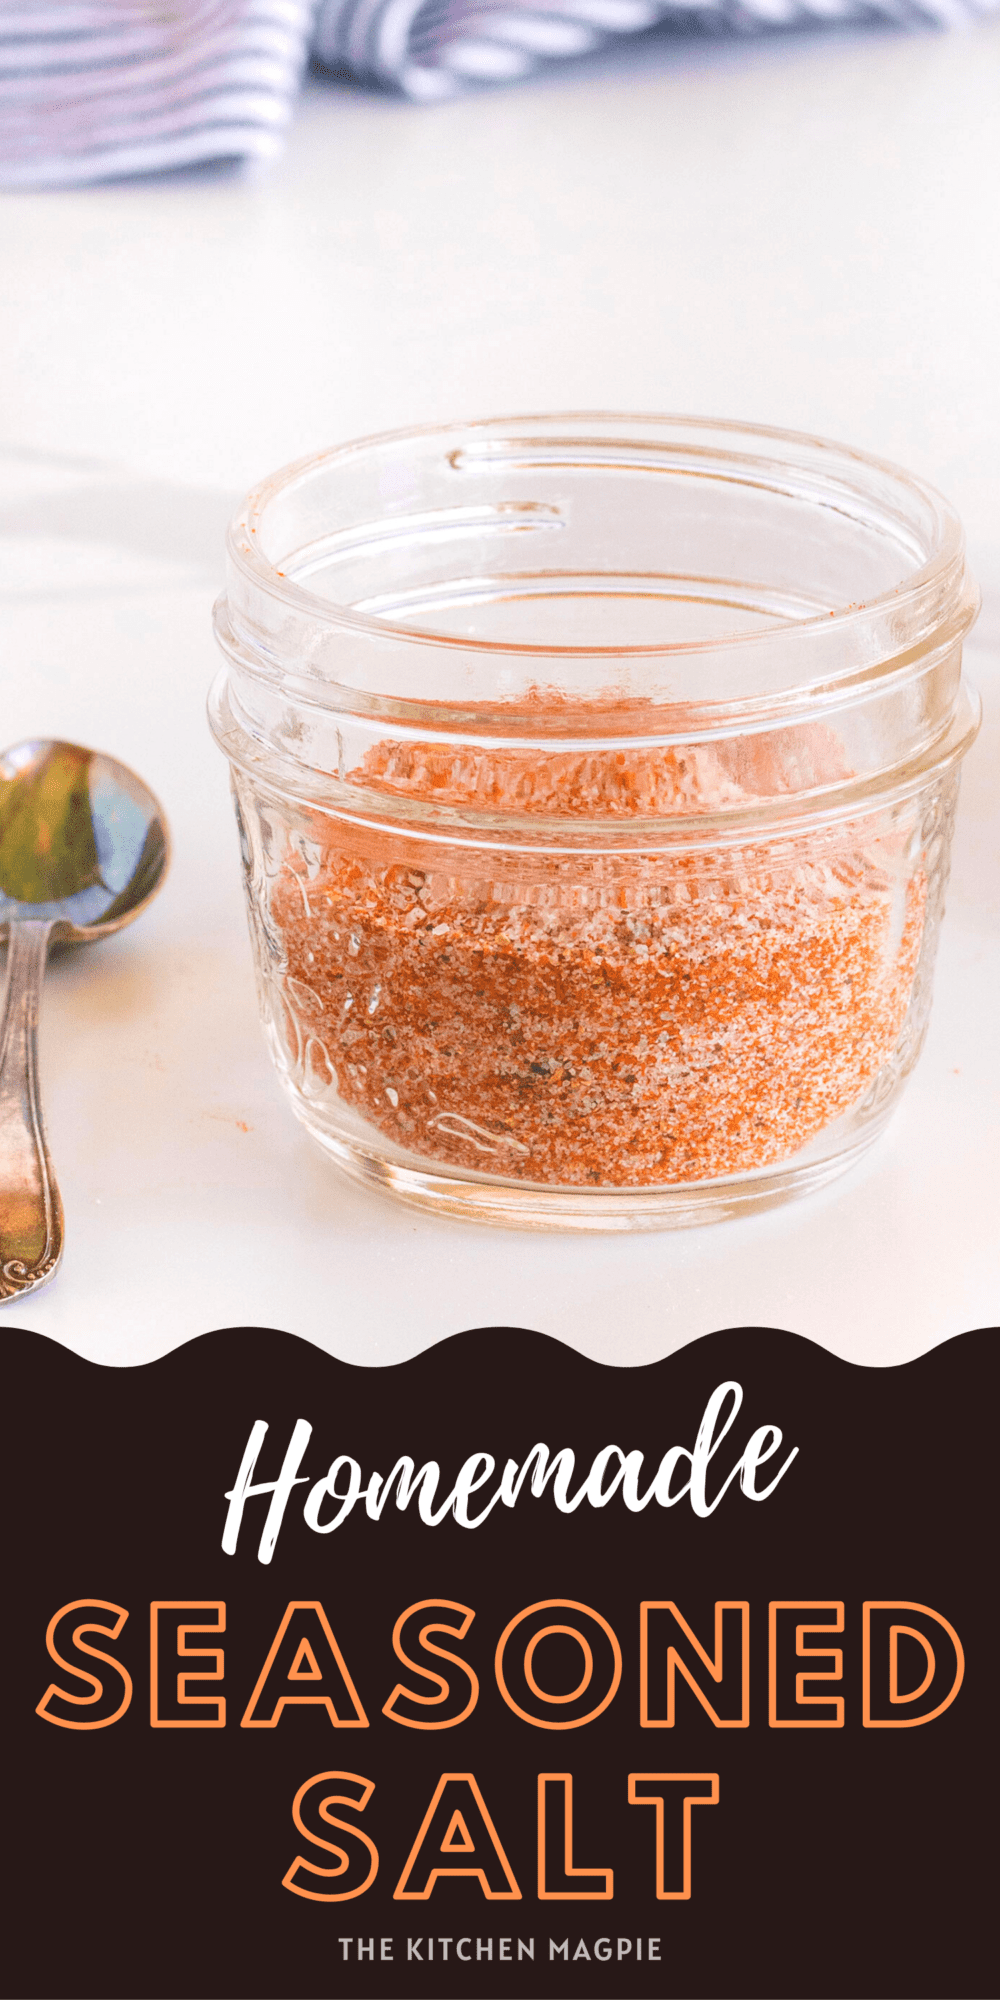 Homemade Seasoning Salt Recipe